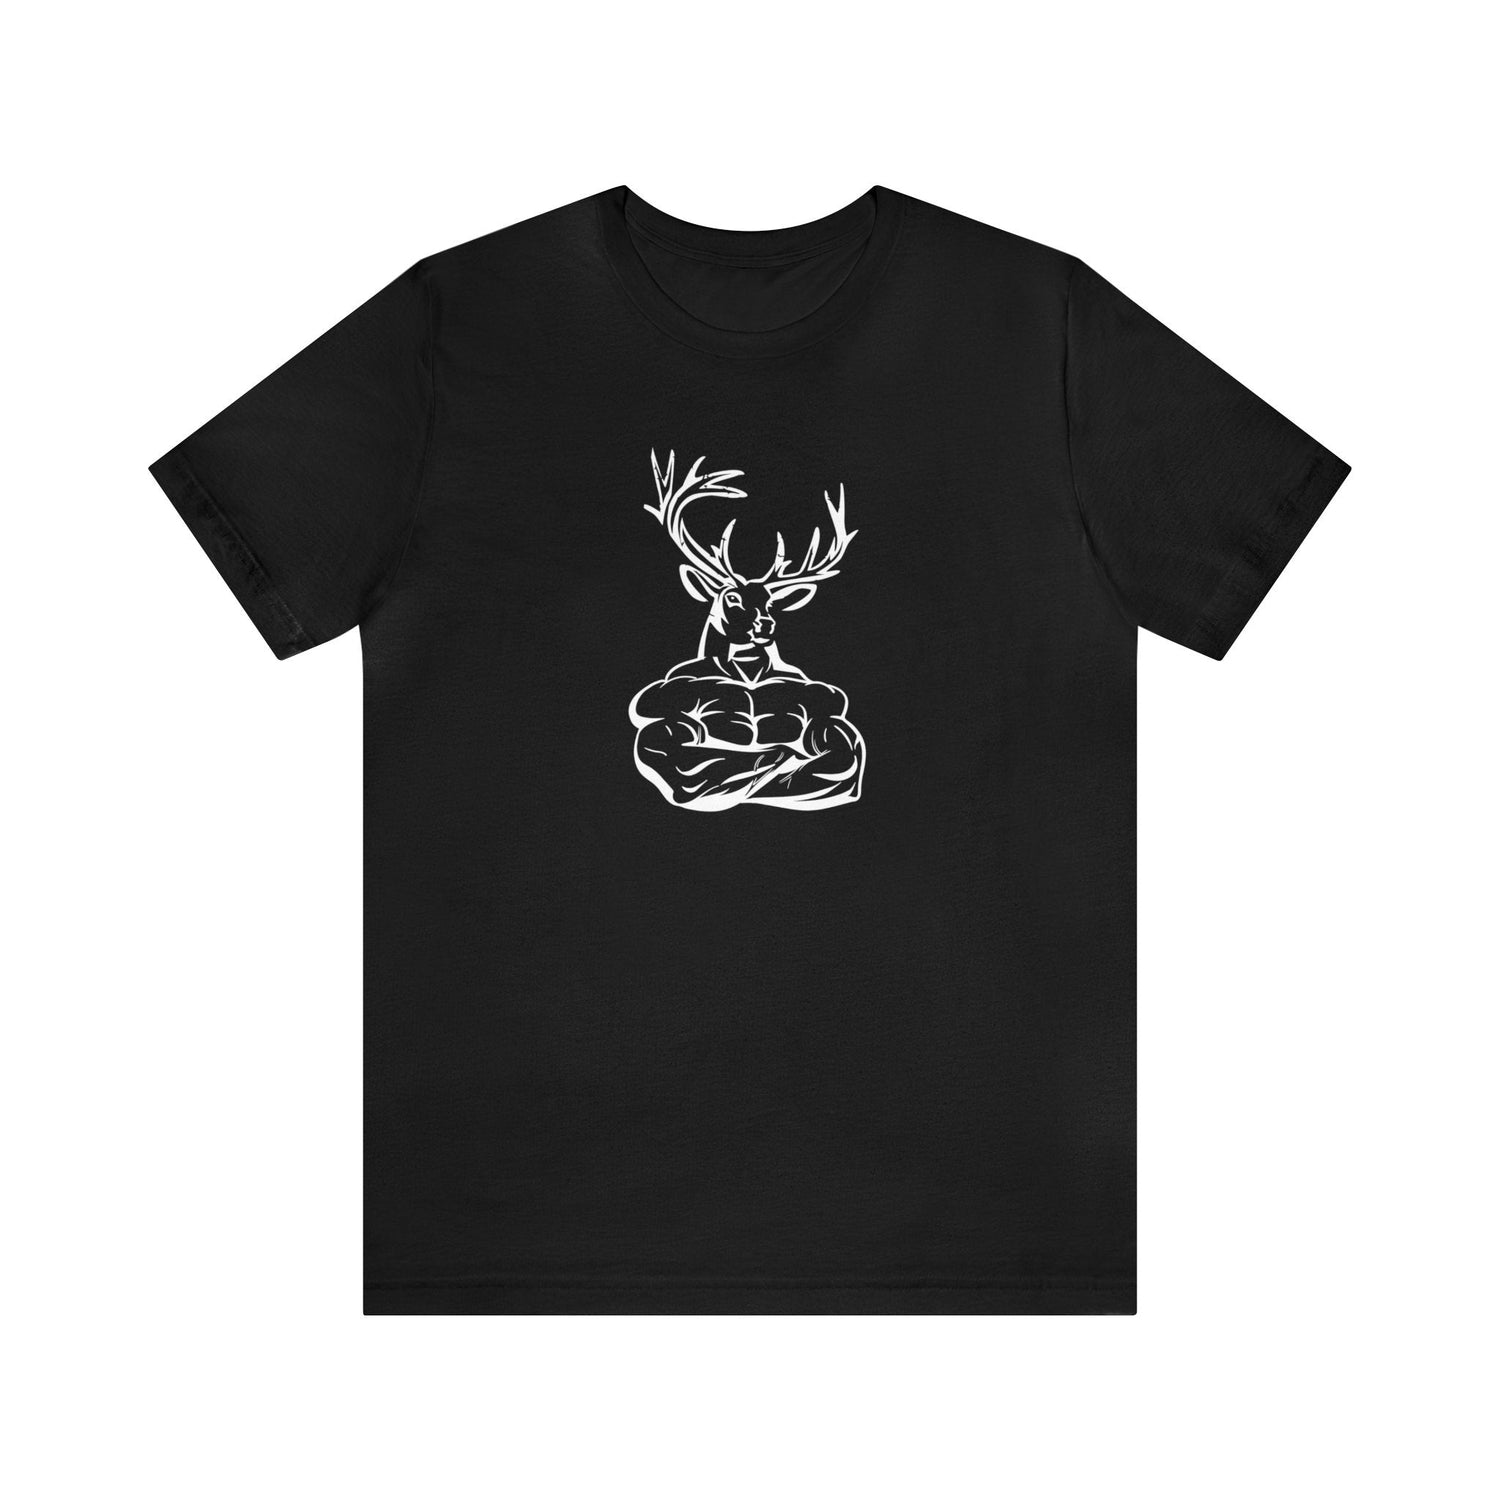 Western deer hunting t-shirt, color black, front design placement